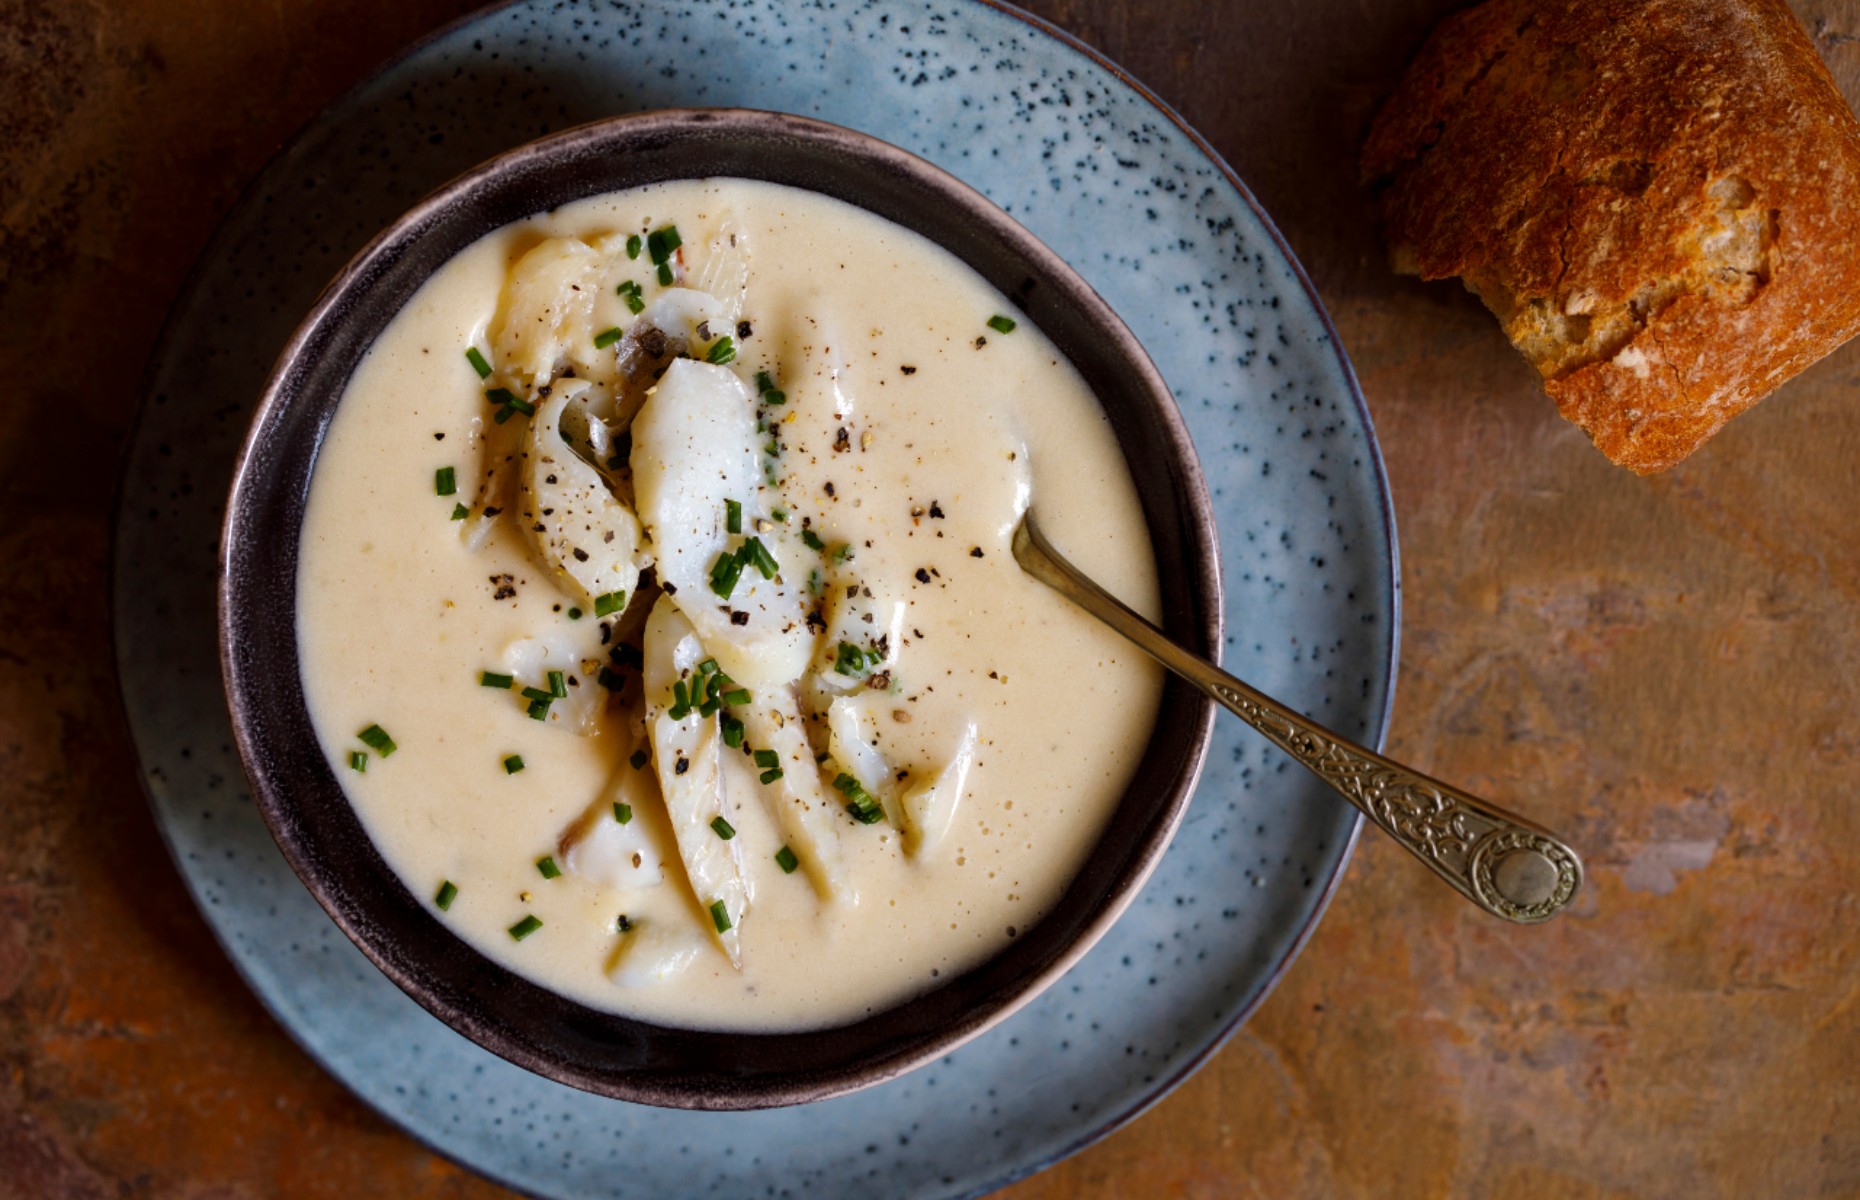 Hearty Scottish fish soup, Cullen skink (Image: Magdanatka/Shutterstock)